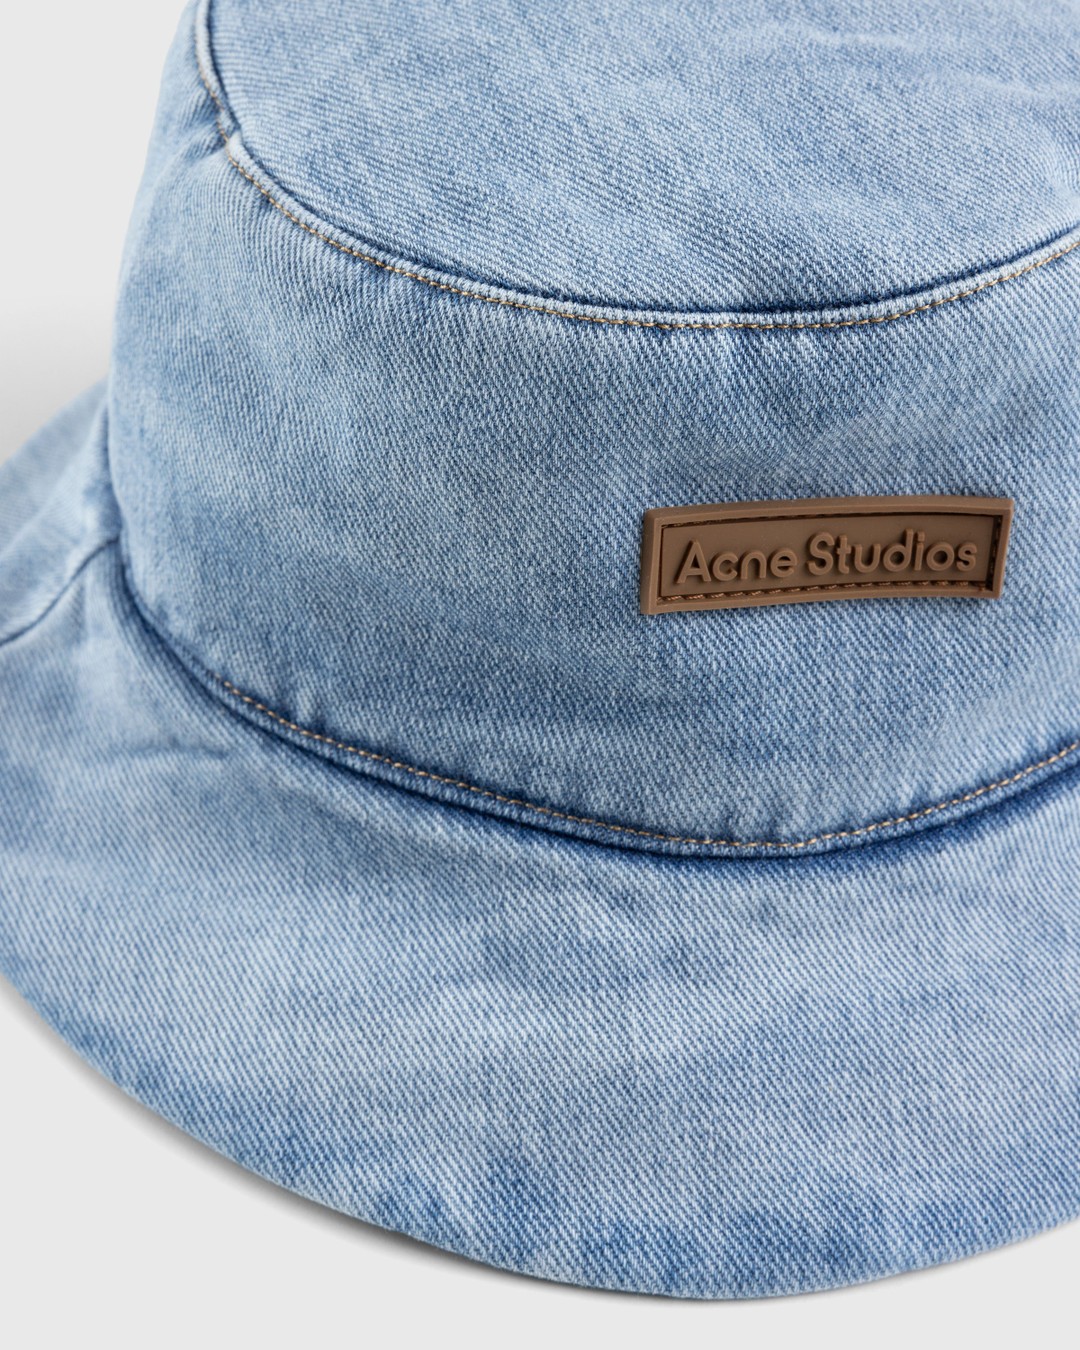 Acne Studios – Padded Denim Bucket Hat Blue  - Hats - Blue - Image 3